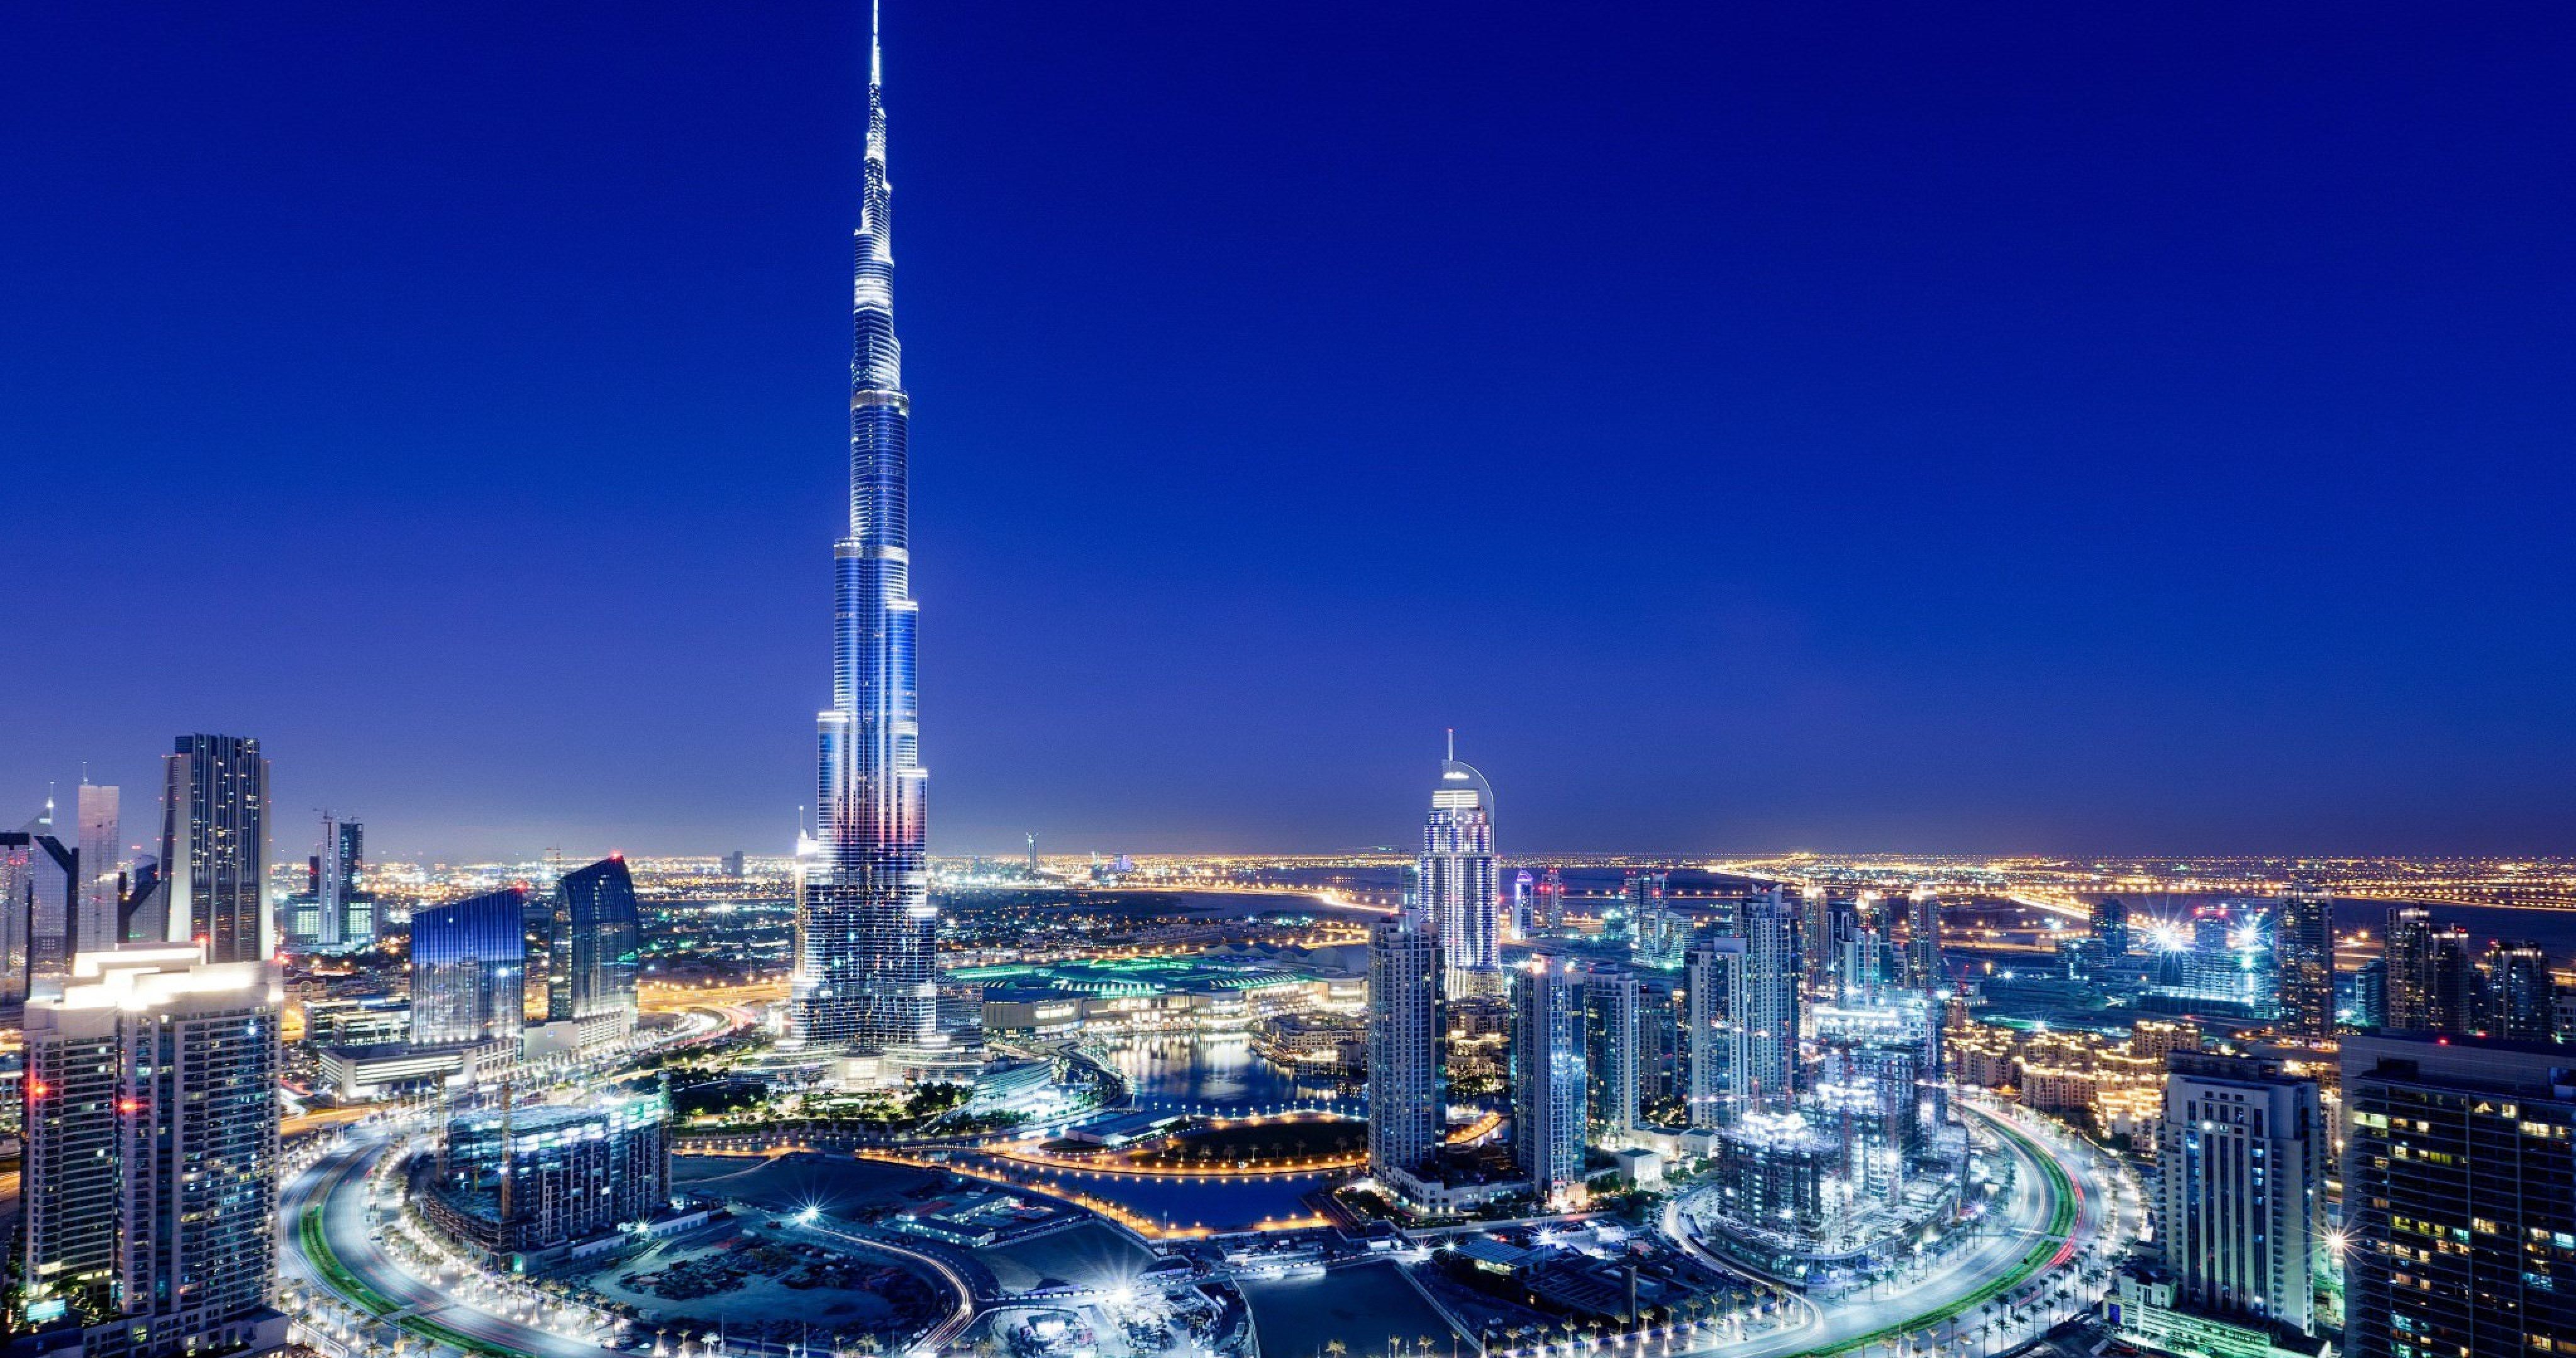 emirati arabi uniti,paesaggio urbano,area metropolitana,città,area urbana,grattacielo